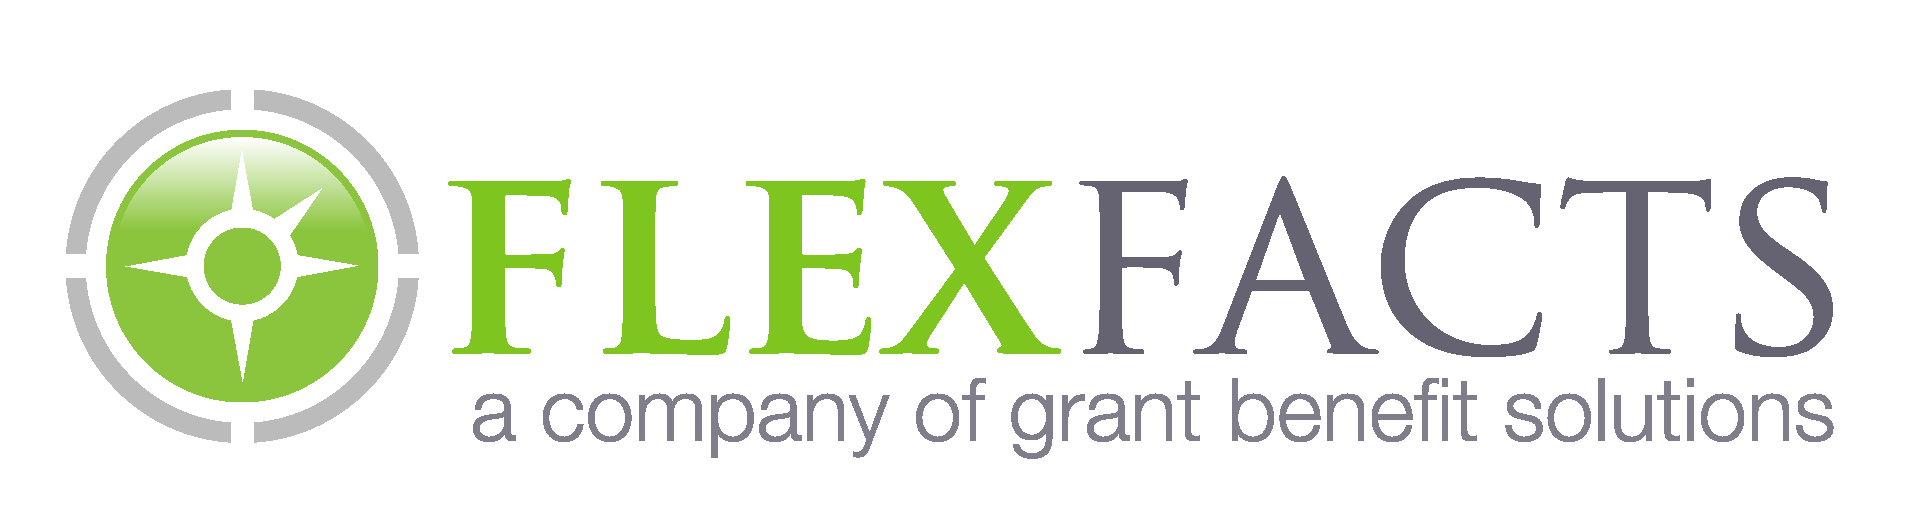 logo for flex facts